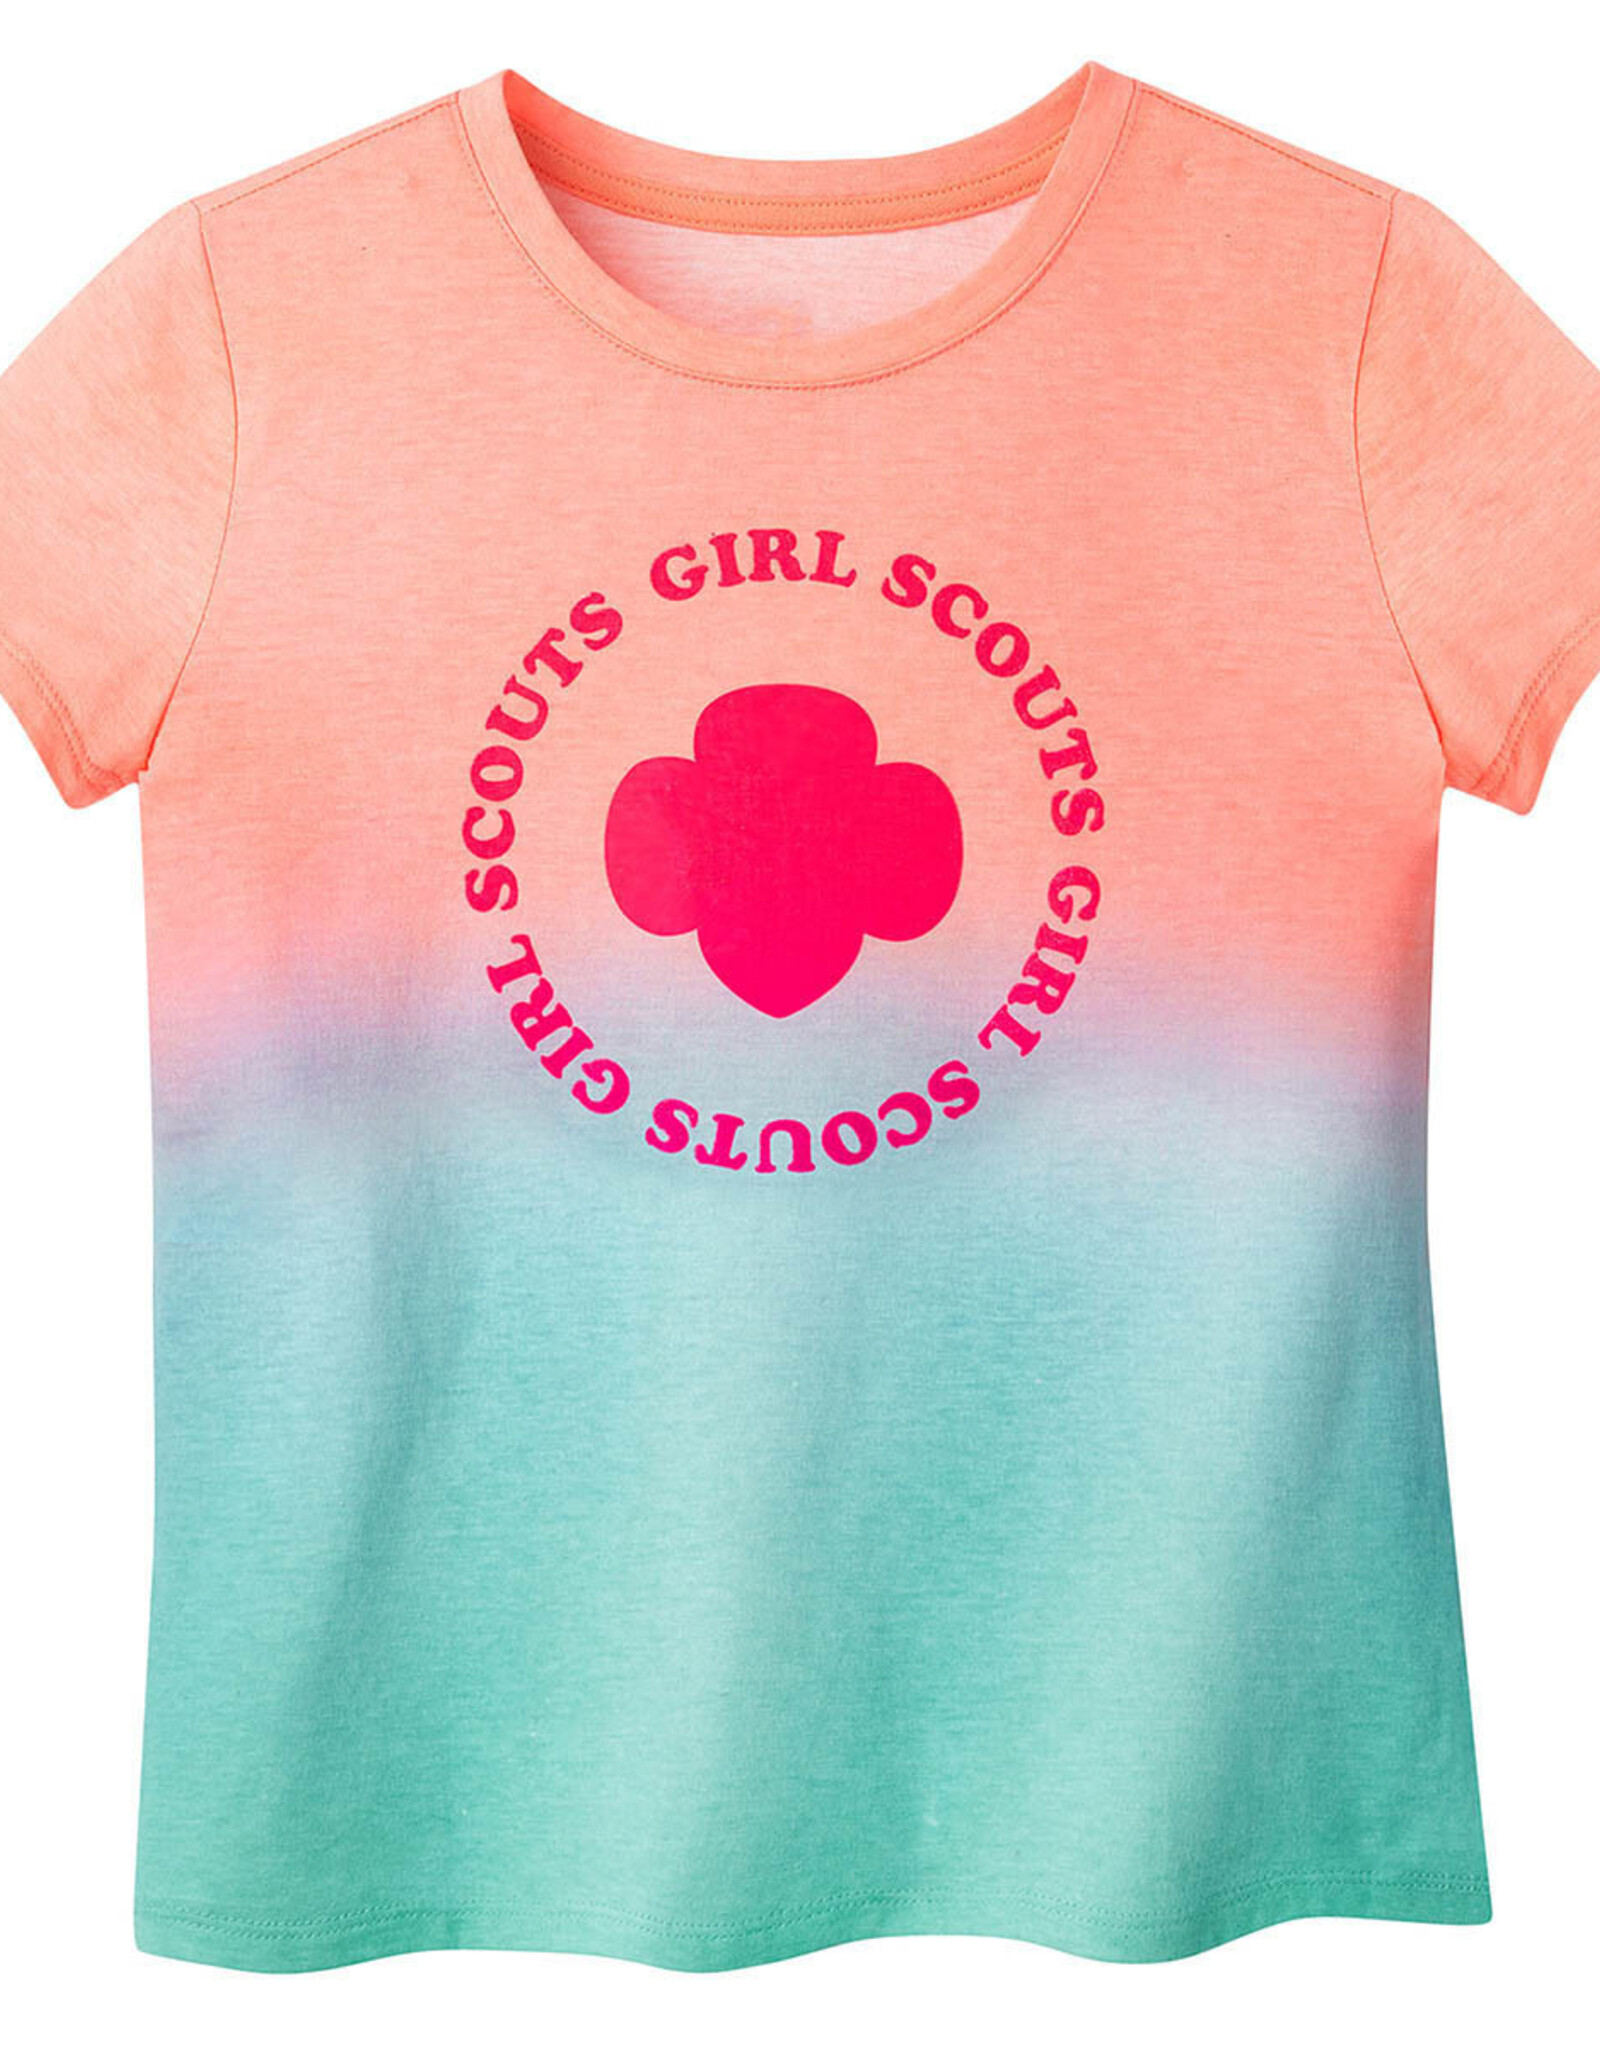 GSUSA Girls Neon Trefoil Gradient T-Shirt